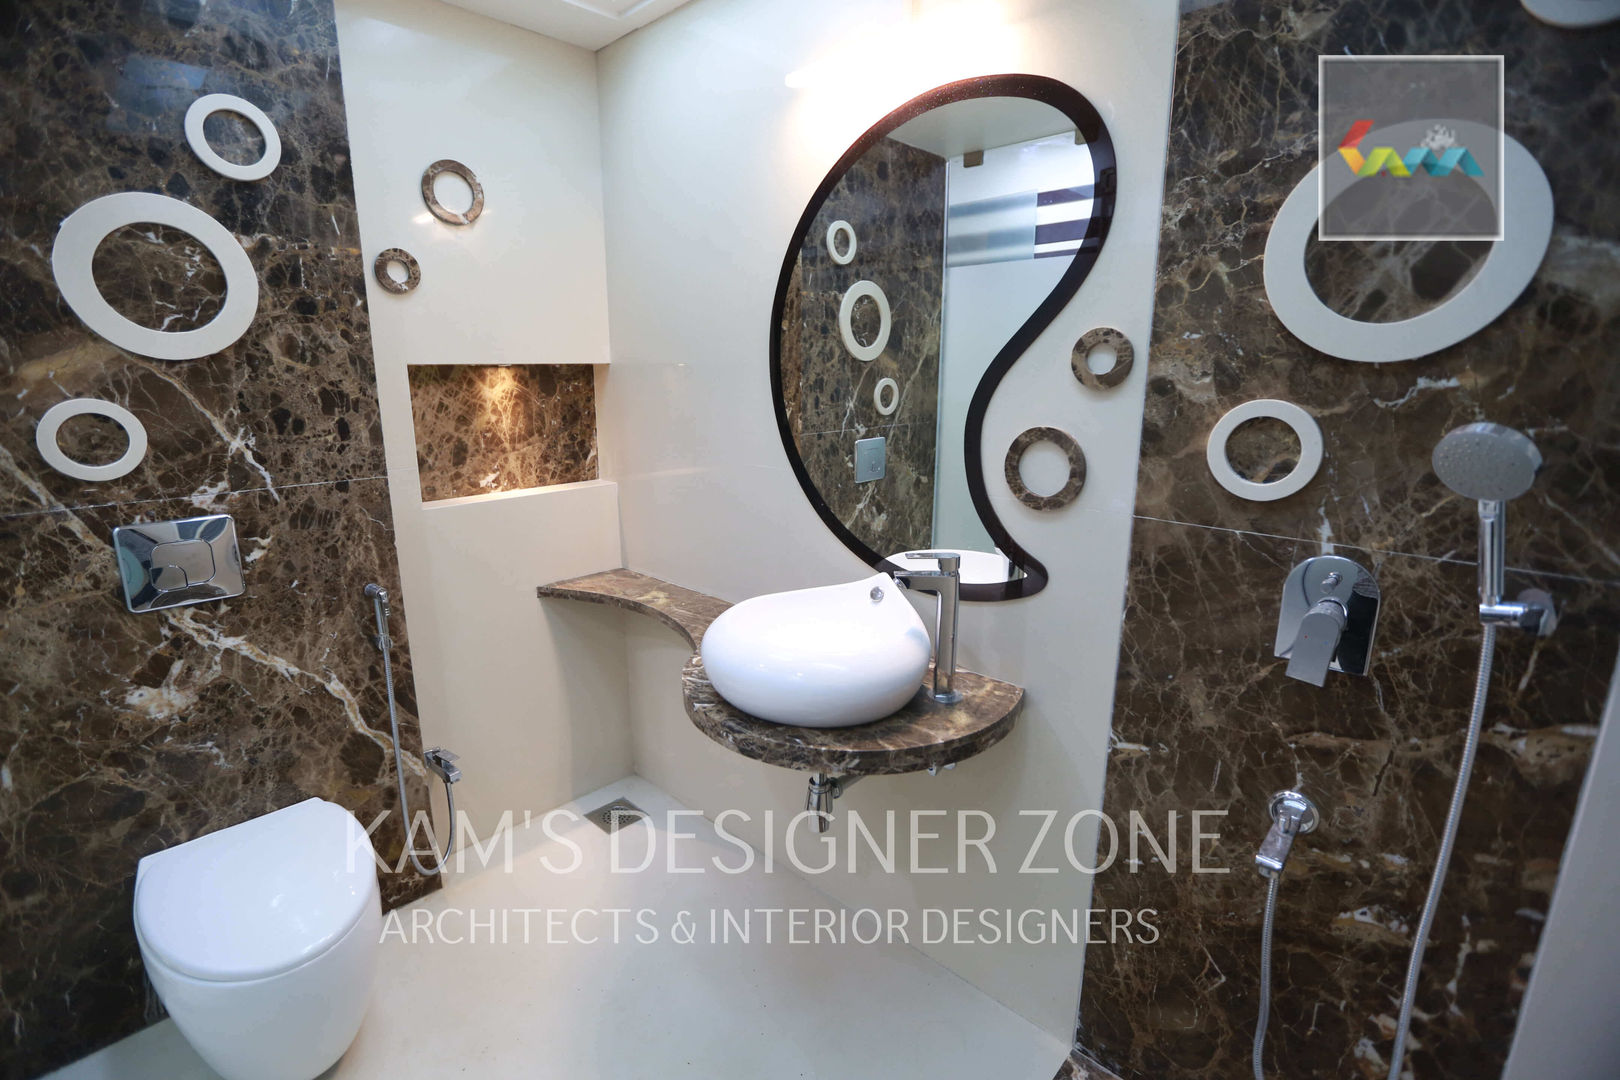 Bathroom Interior Design KAMS DESIGNER ZONE Classic style bathroom